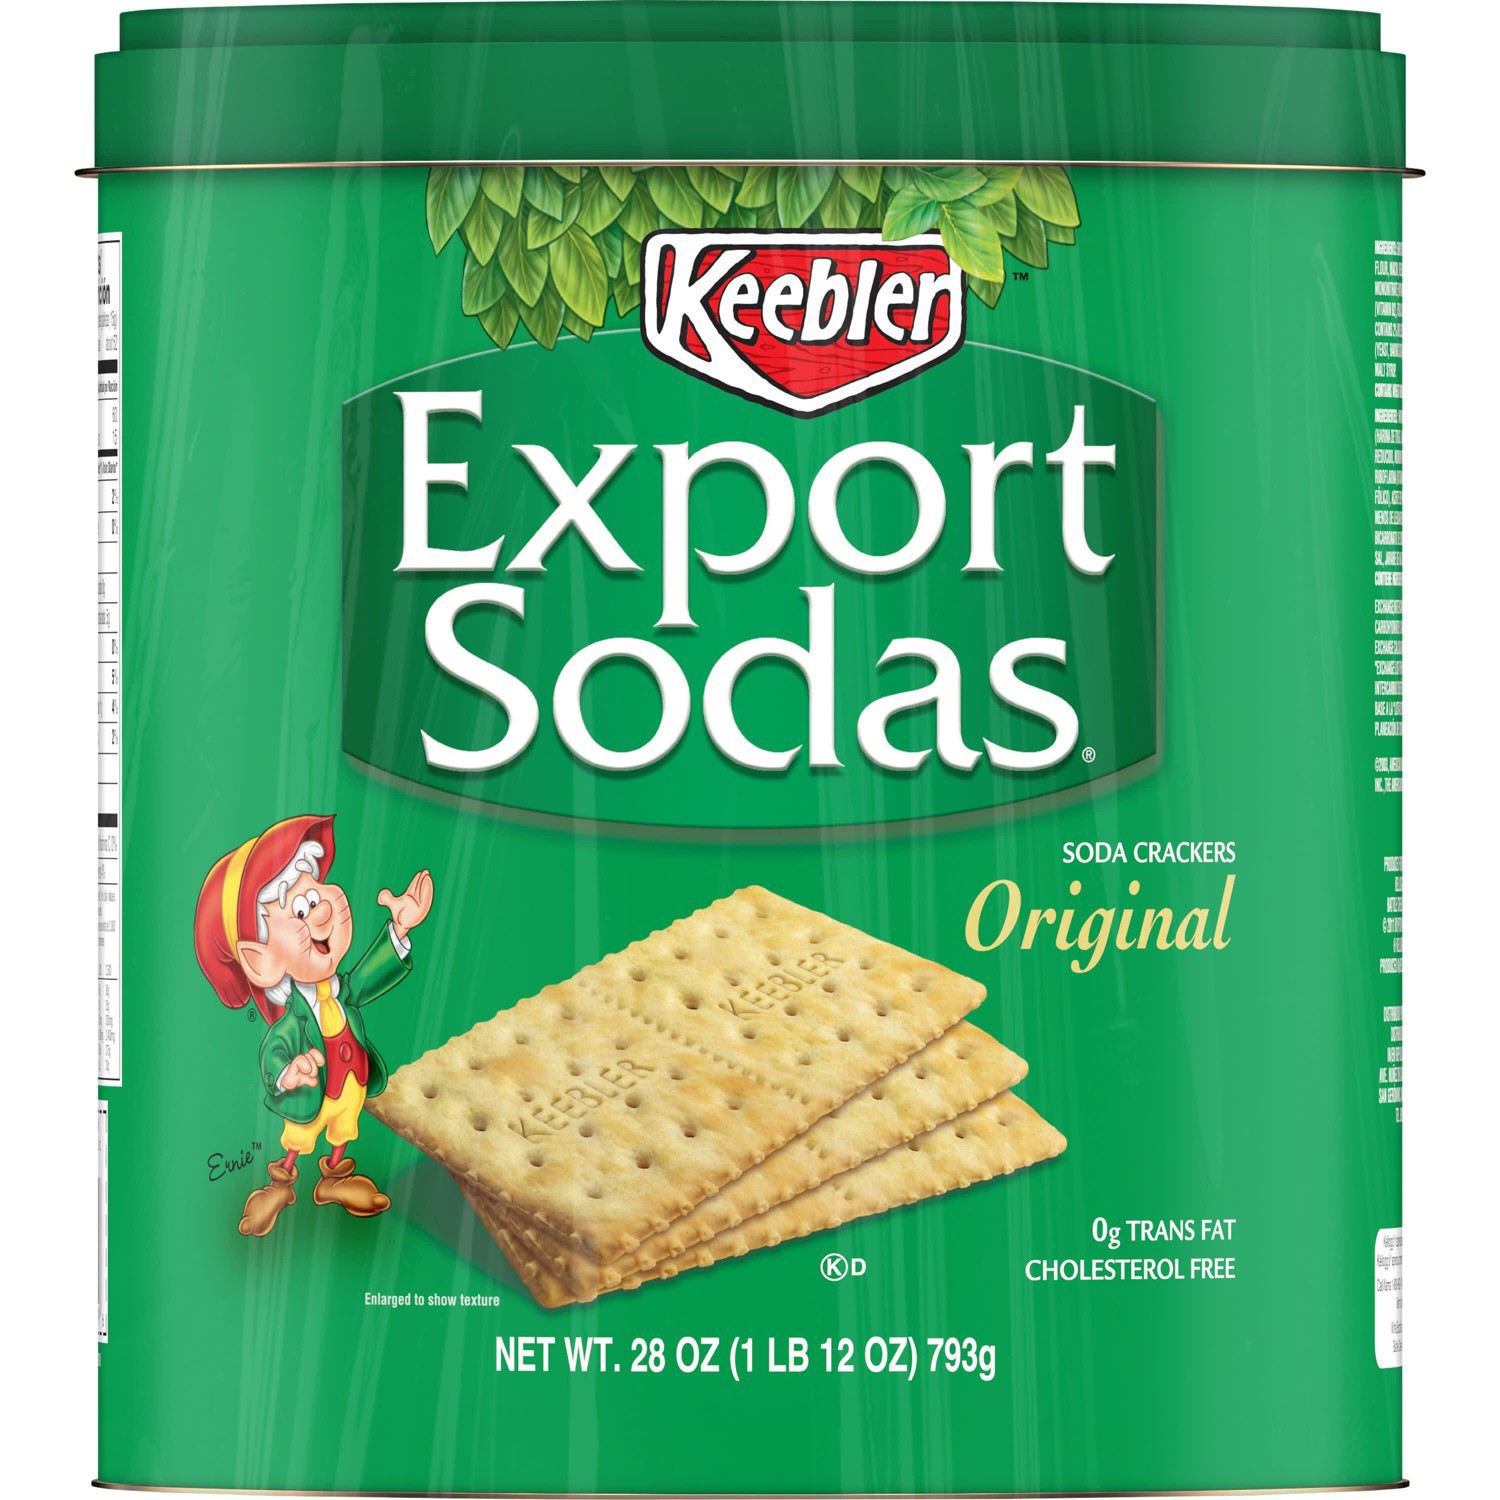 slide 20 of 63, Keebler Export Sodas Soda Crackers, Original, 28 oz, 28 oz